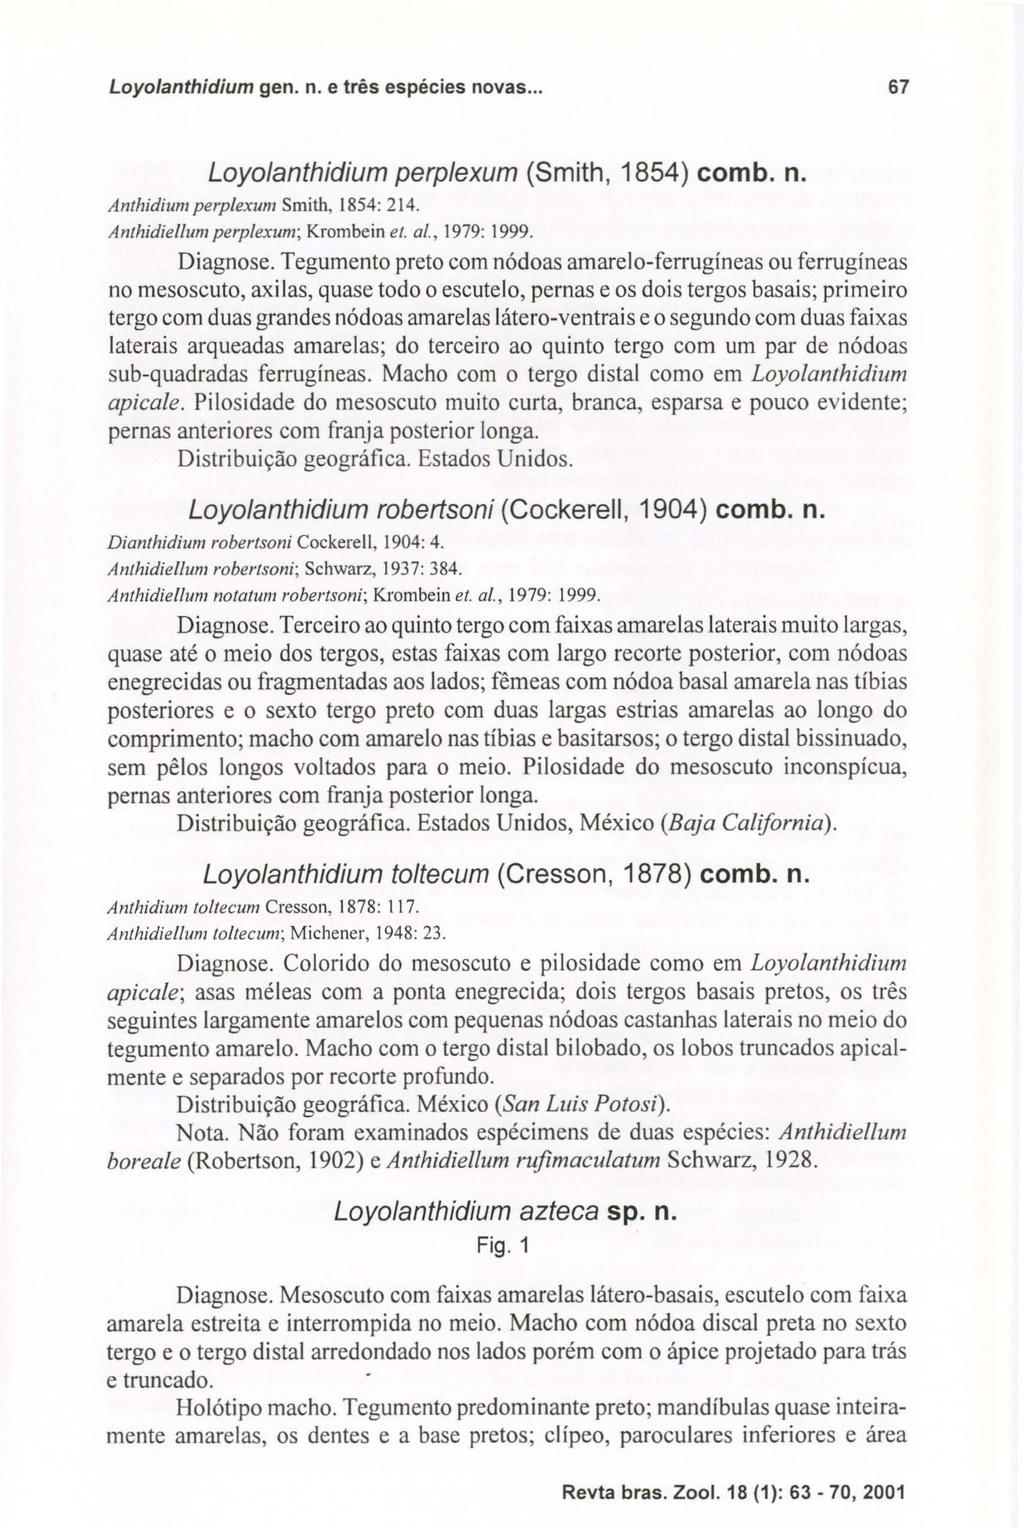 Loyolanthidium gen. n. e três espécies novas... 67 Loyolanthidium perplexum (Smith, 1854) comb. n. Anthidiumperp/exum Smith, 1854: 214. Anthidie//um perp/exum; Krombein et. 0/., 1979: 1999. Diagnose.